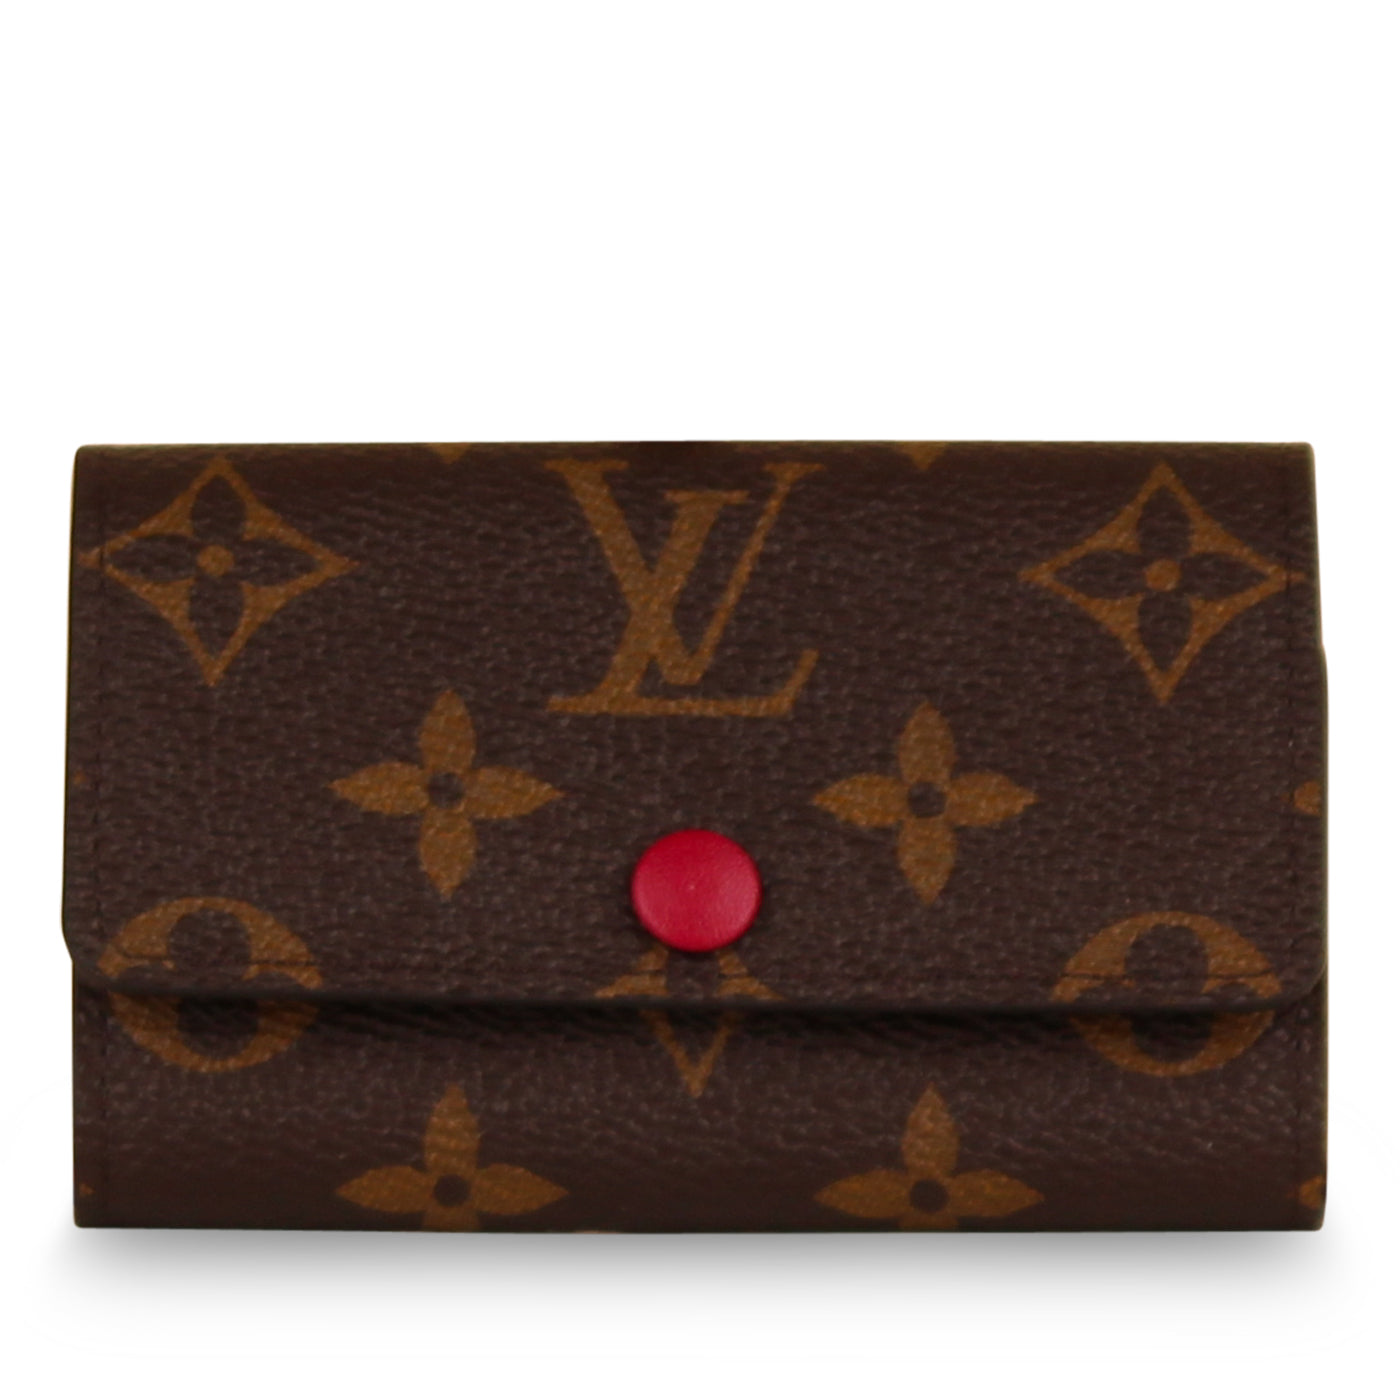 Shop Louis Vuitton 6 key holder by Garcian's